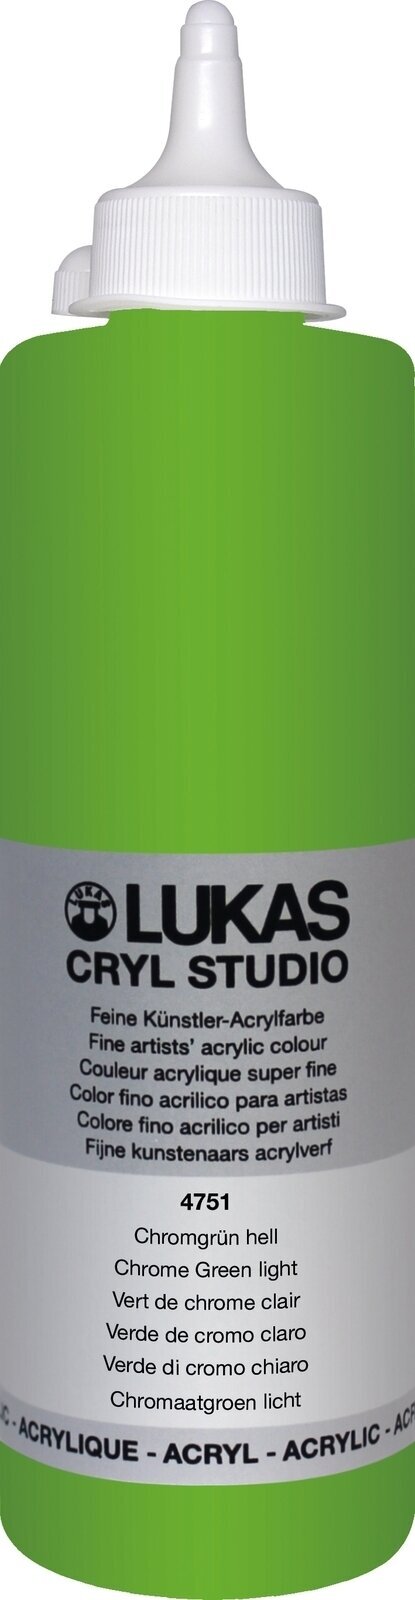 Acrylic Paint Lukas Cryl Studio Acrylic Paint 500 ml Chrome Green Light